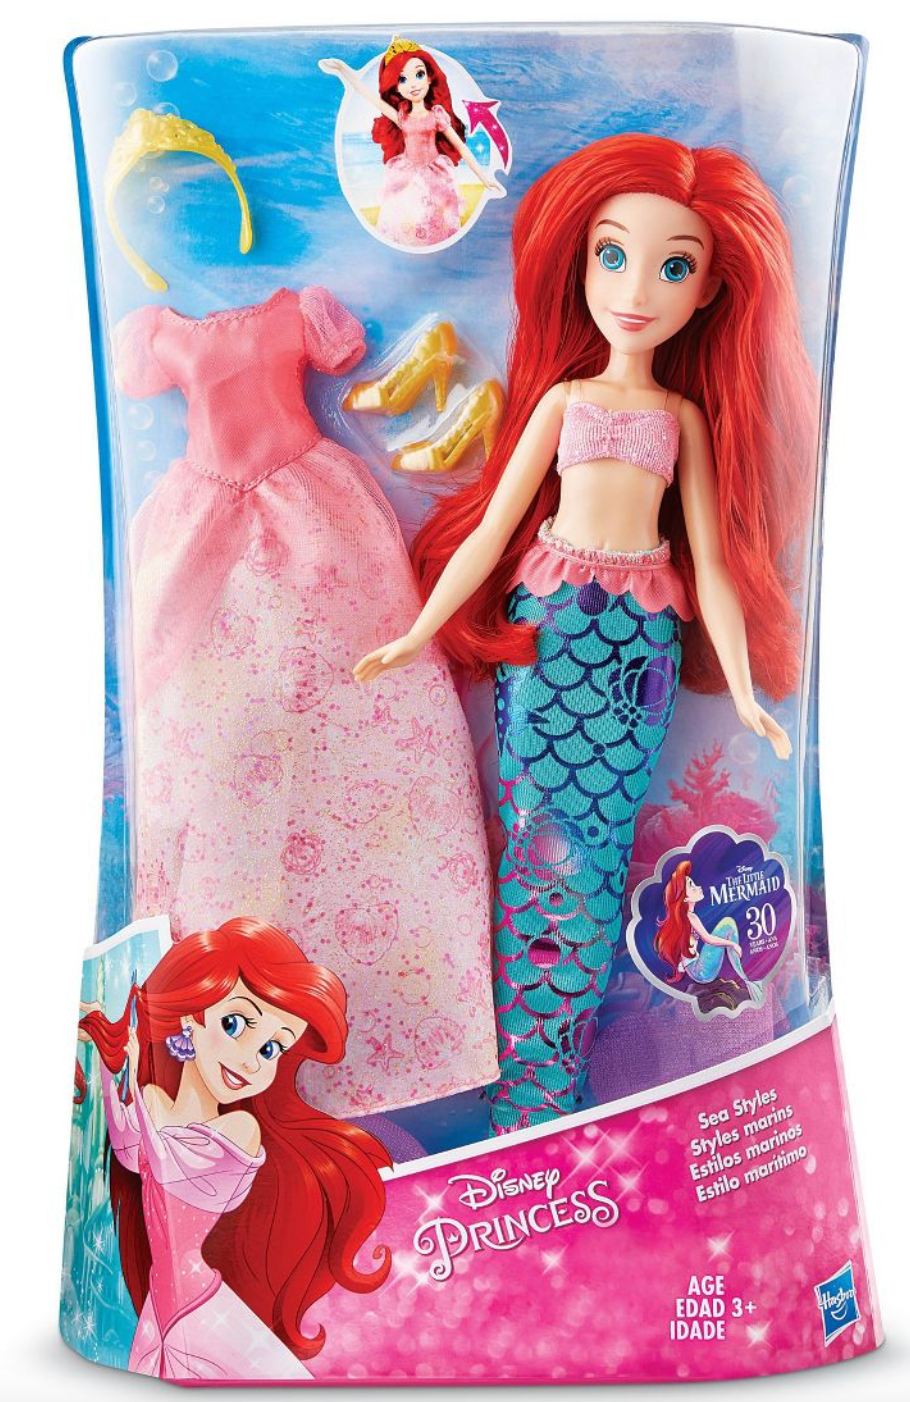 Disney Princess Sea Styles Ariel Doll Toy New with Box